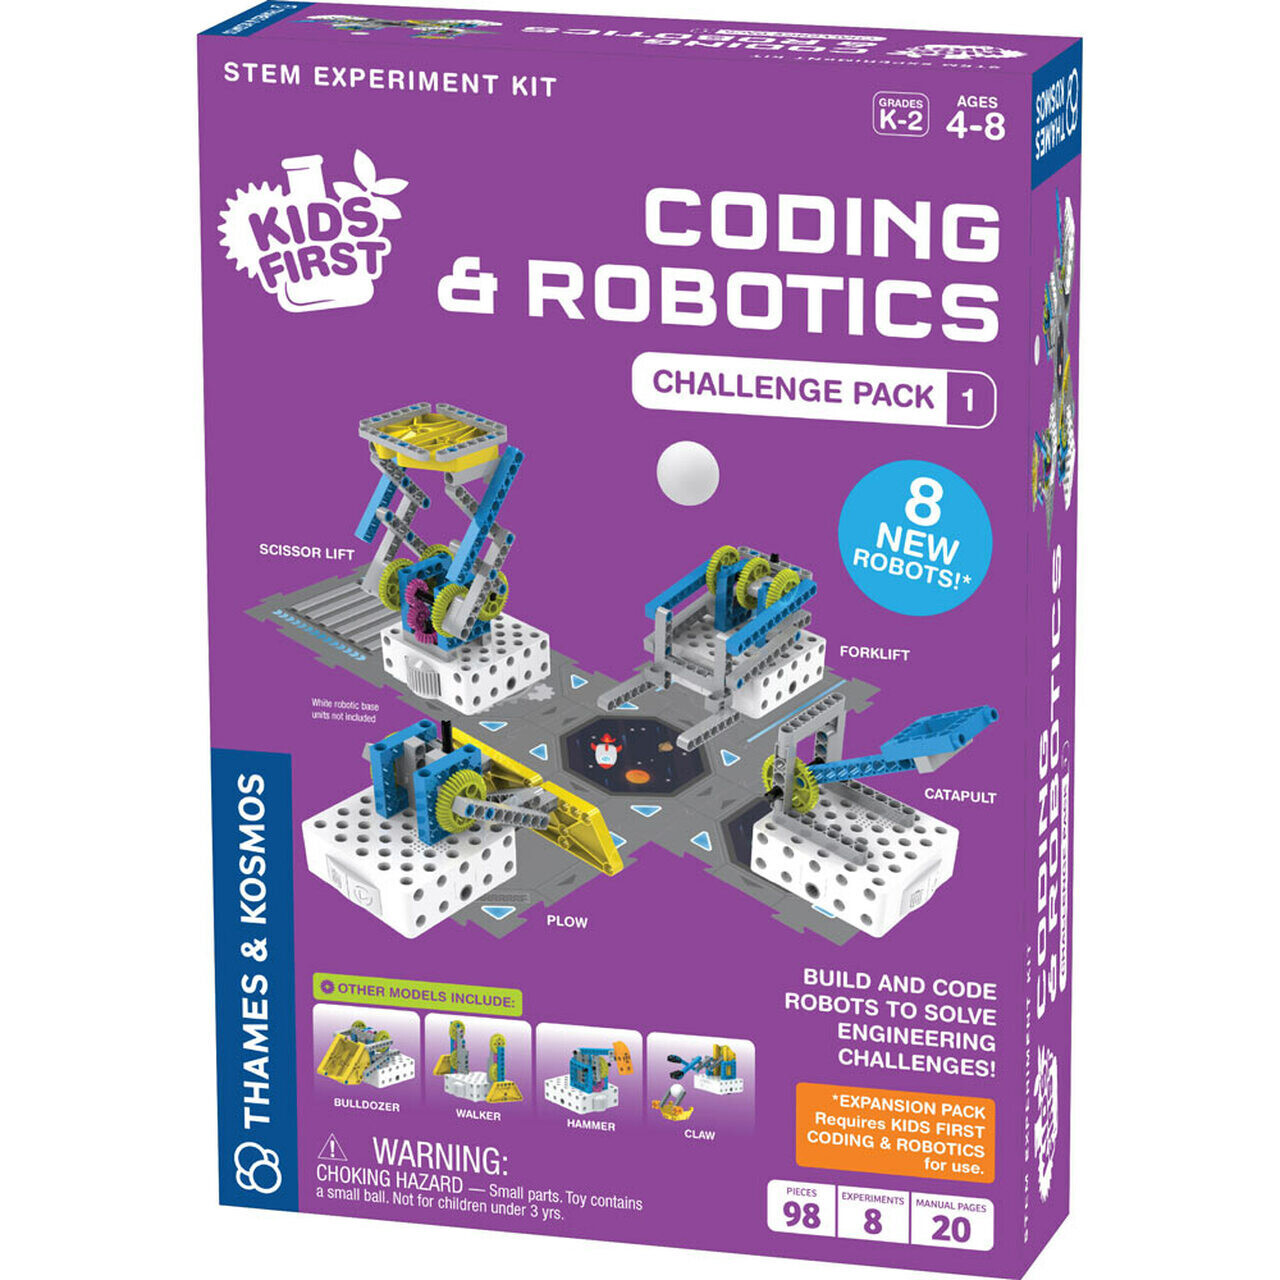 Coding & Robotics challenge kit